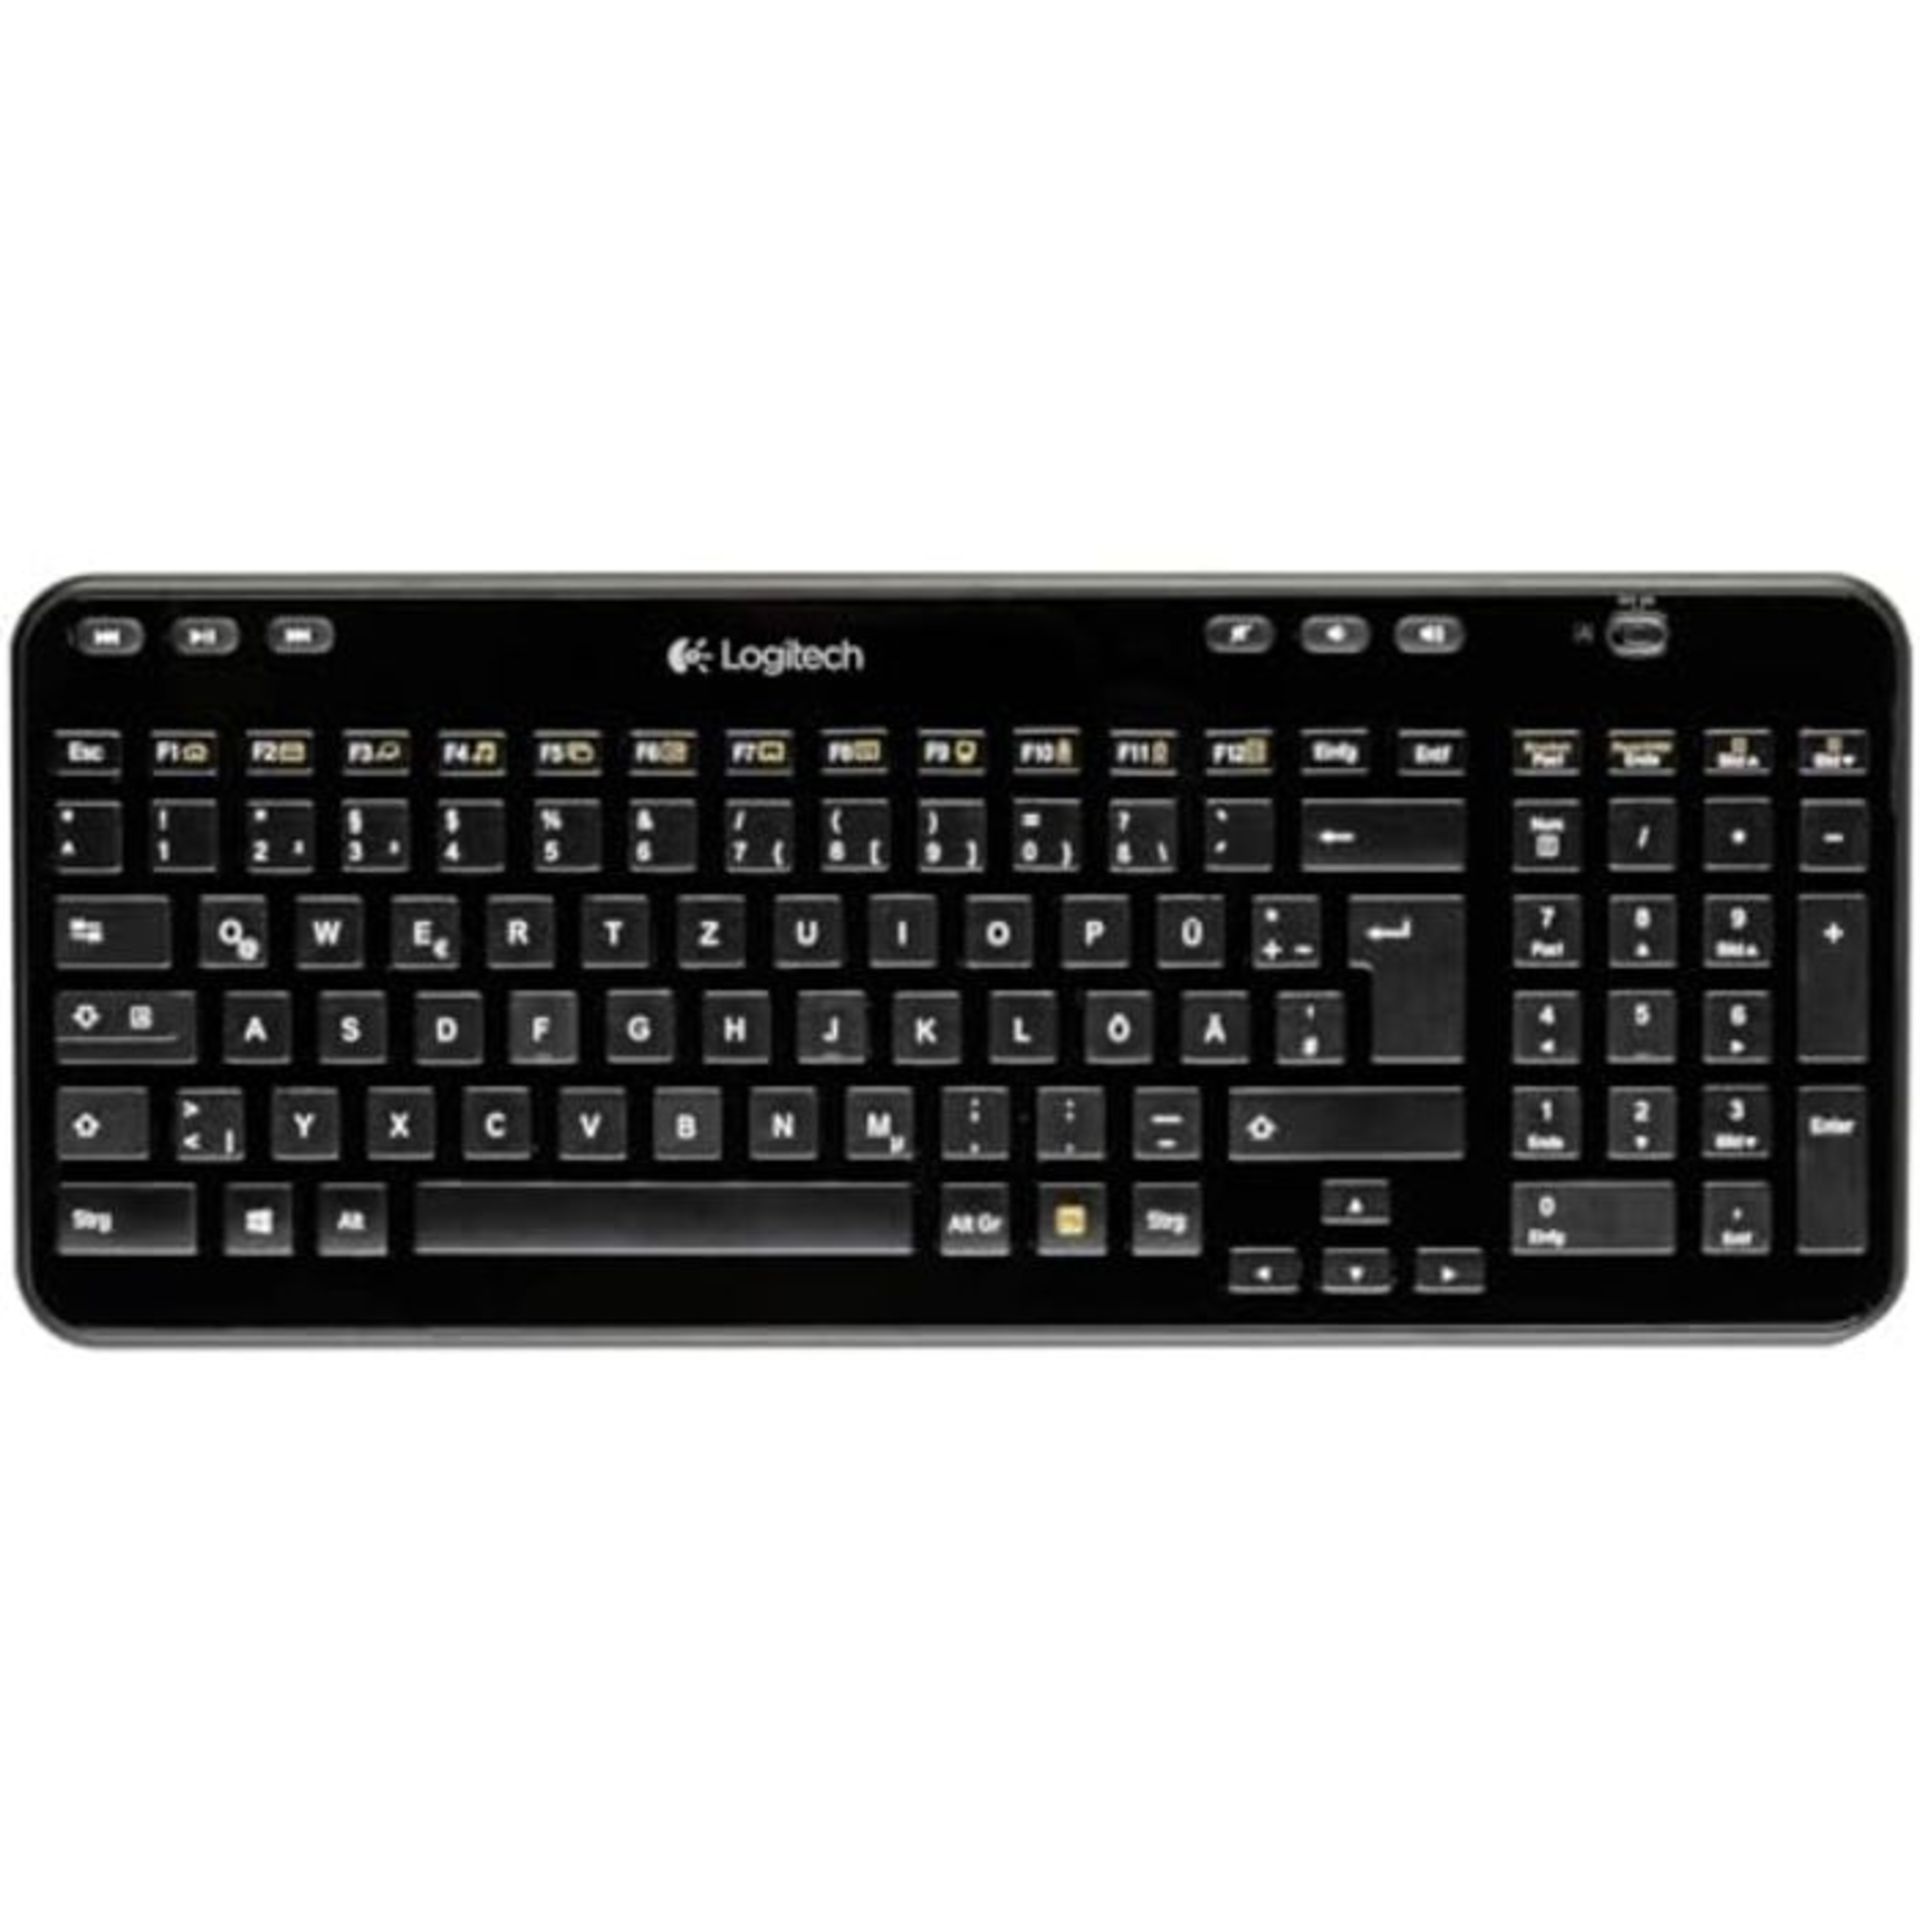 Logitech K360 Compact Wireless Keyboard for Windows, QWERTZ German Layout - Black